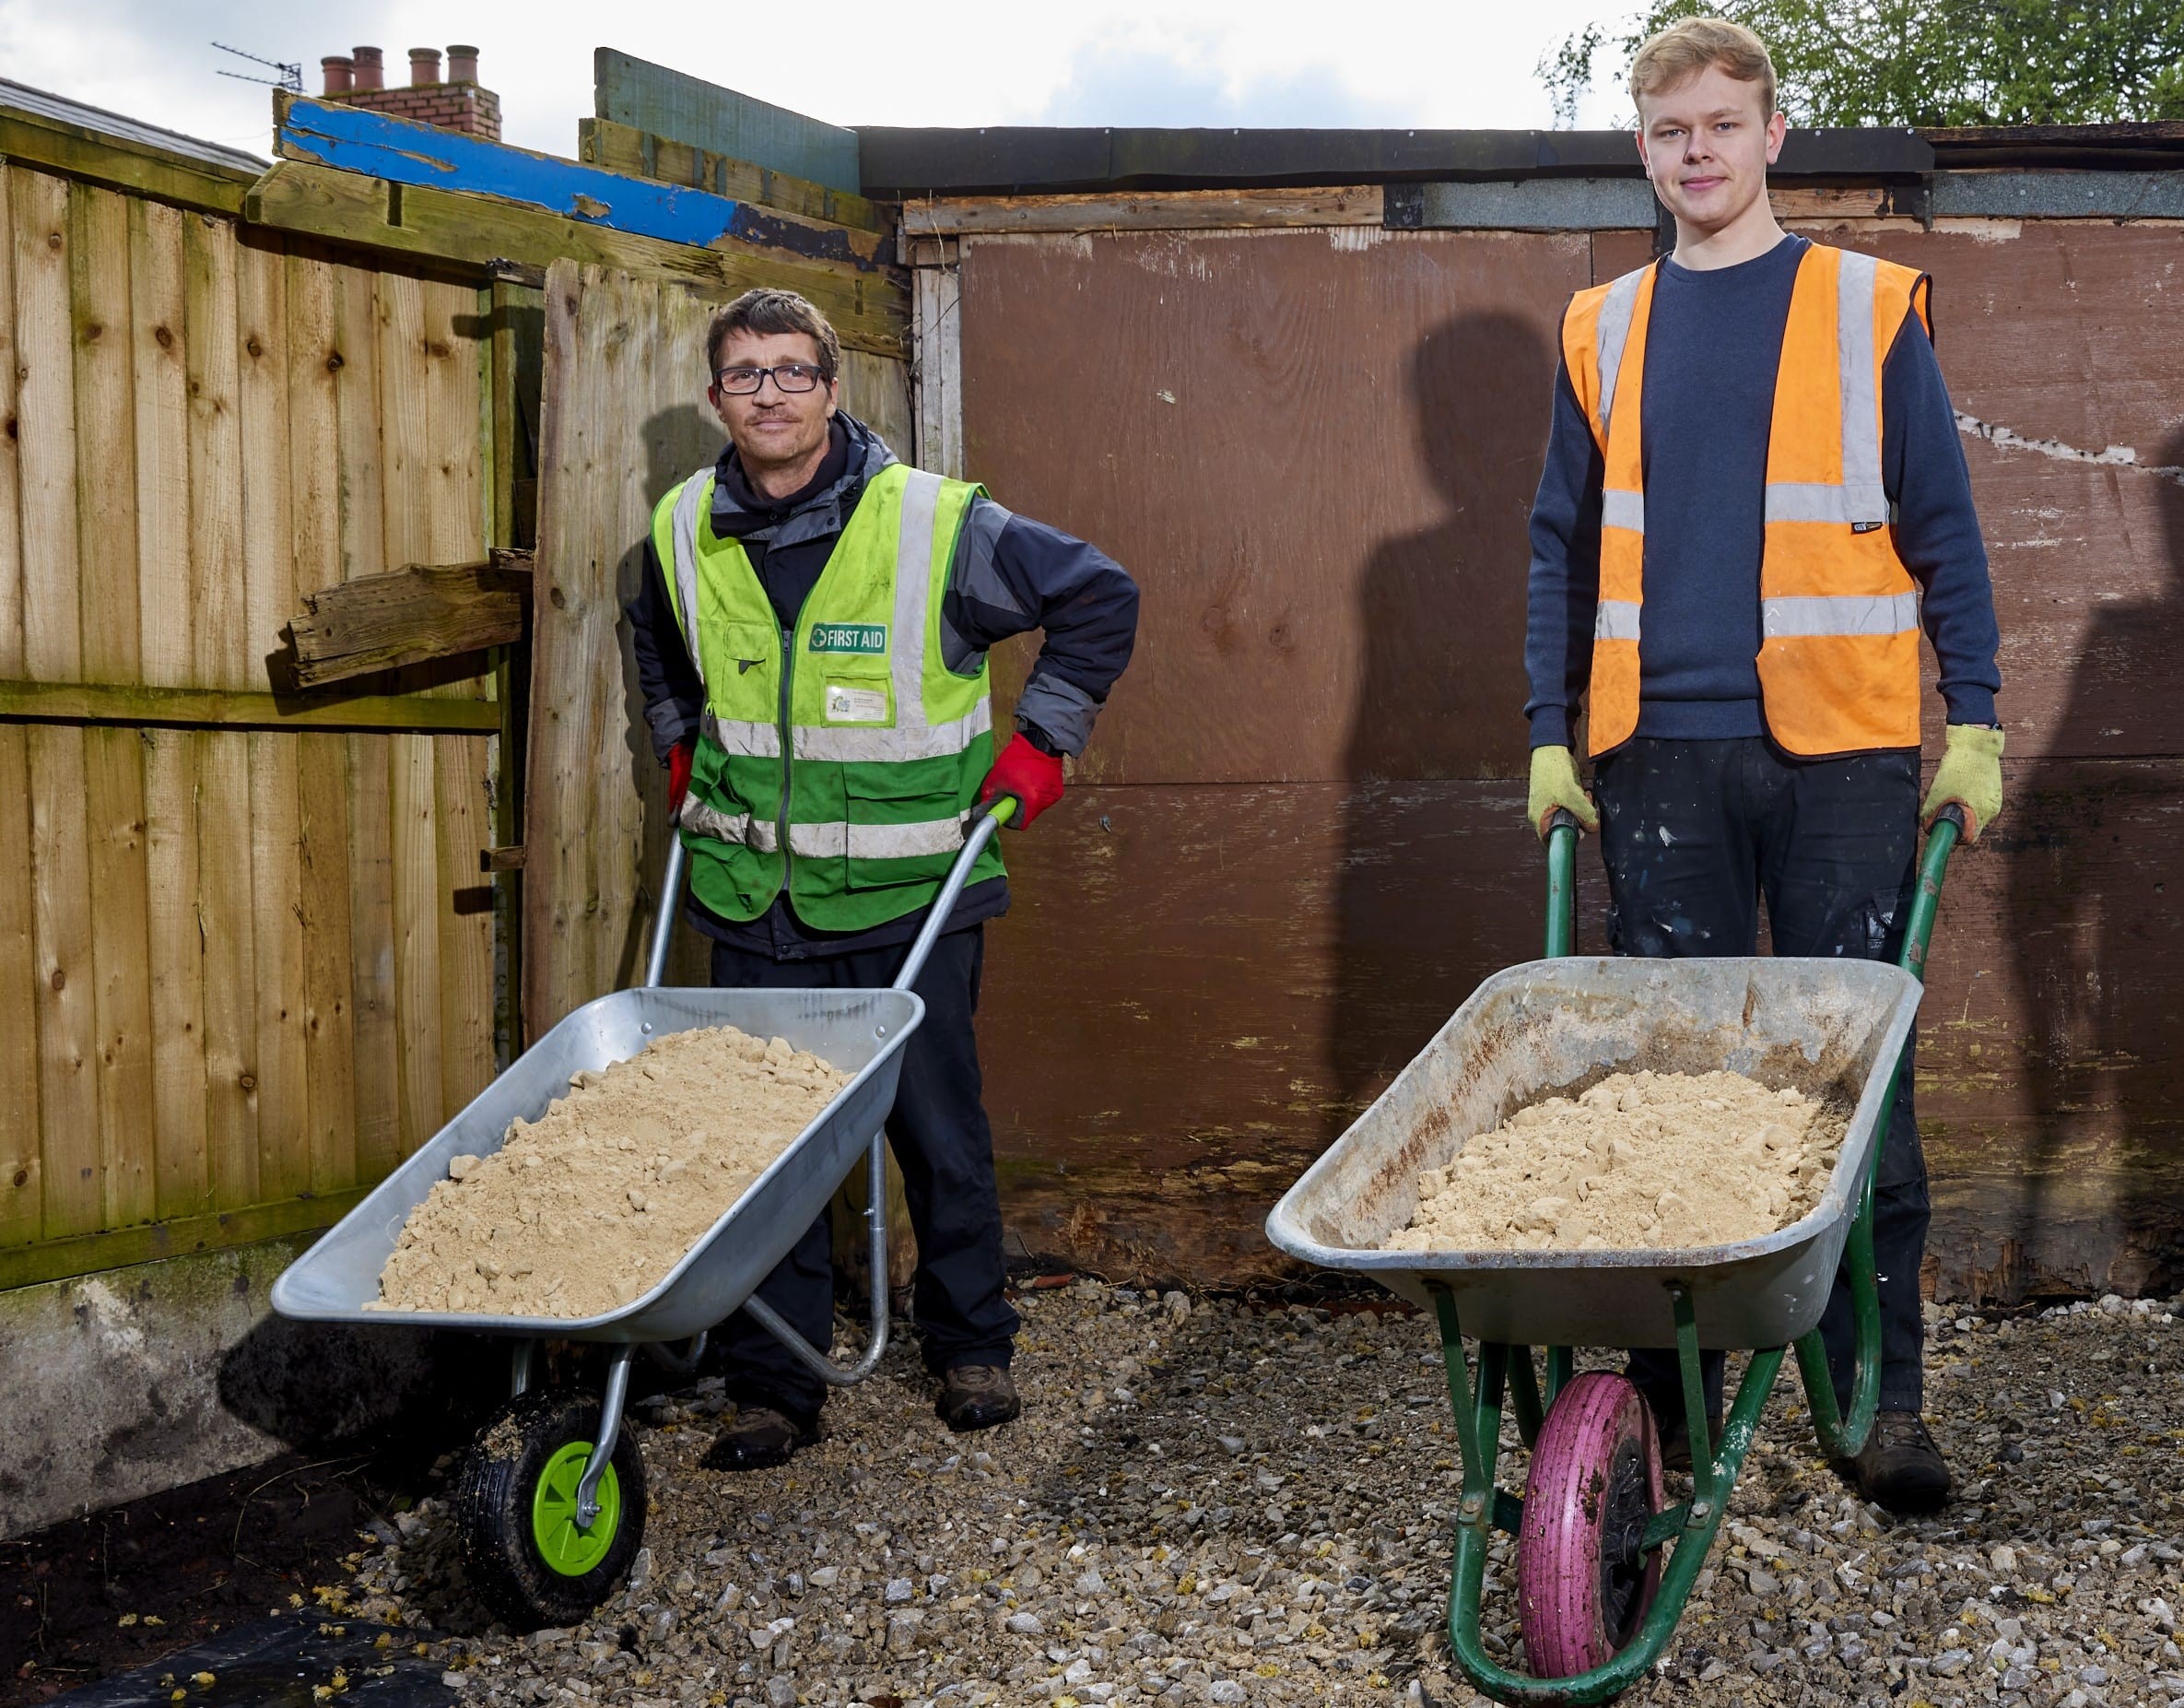 Selco donates materials to Manchester community garden